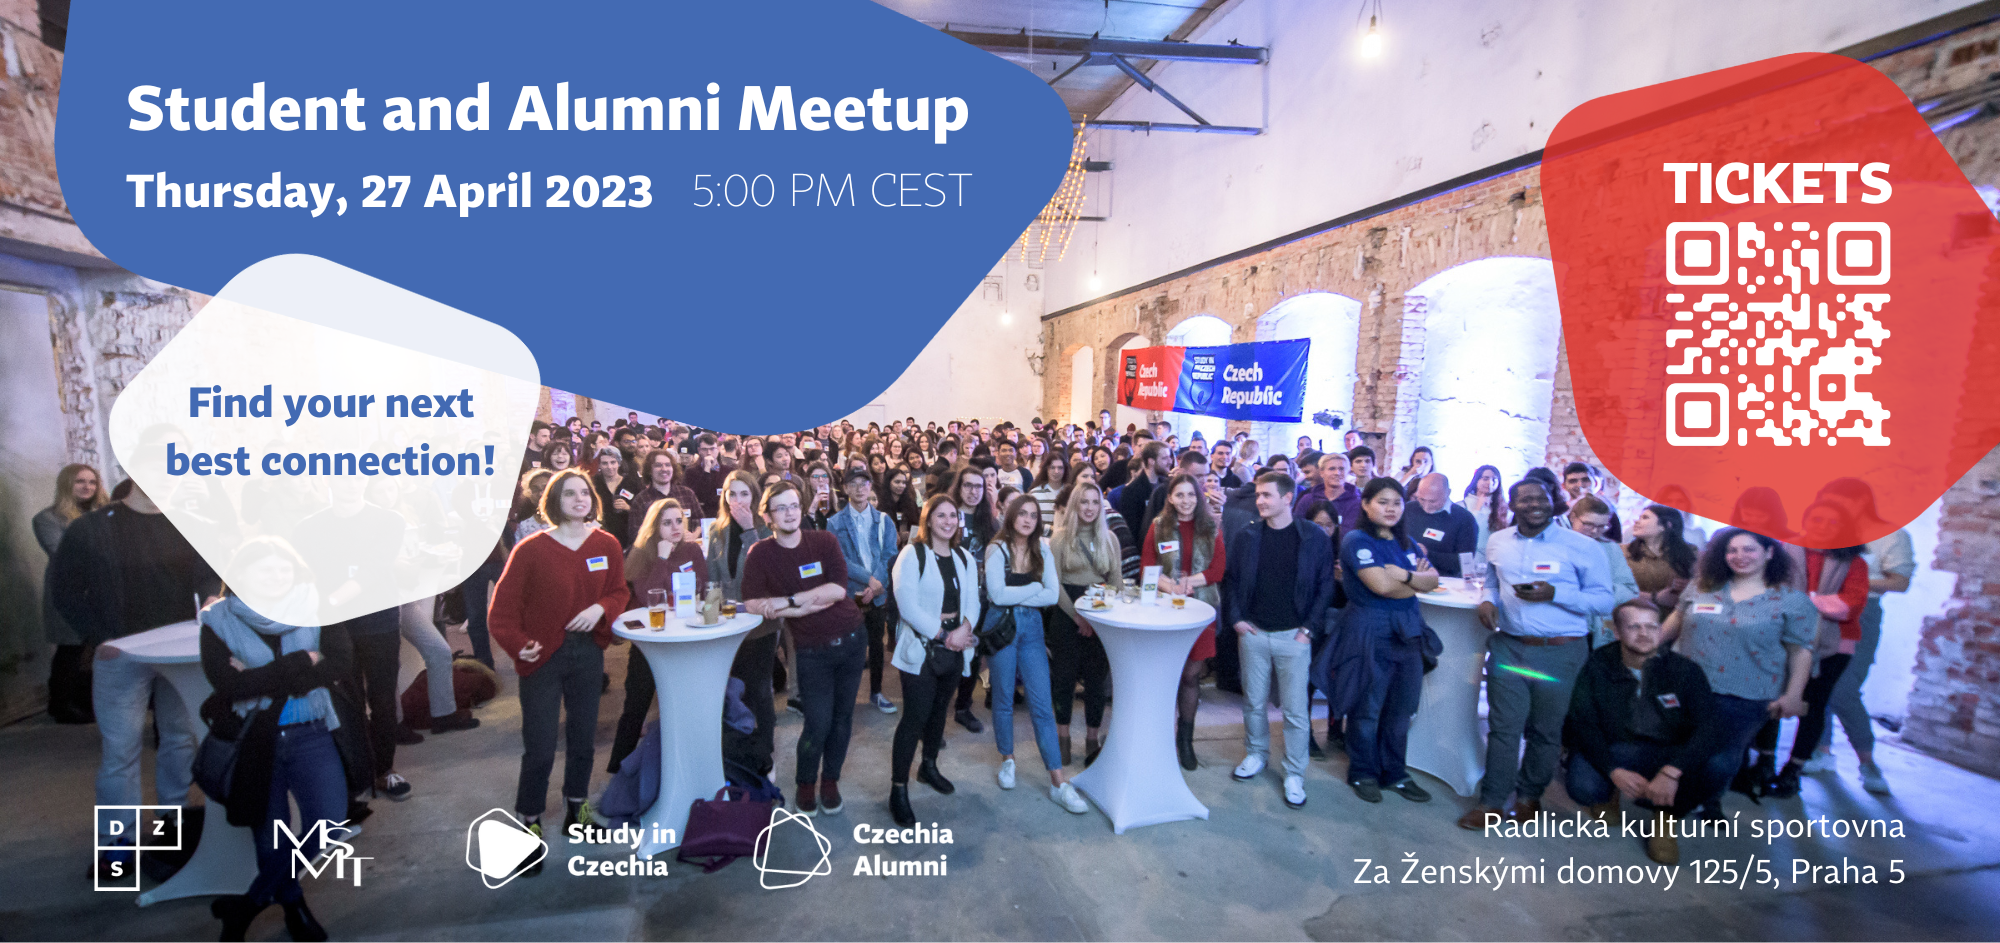 Student and Alumni Meetup in Prague